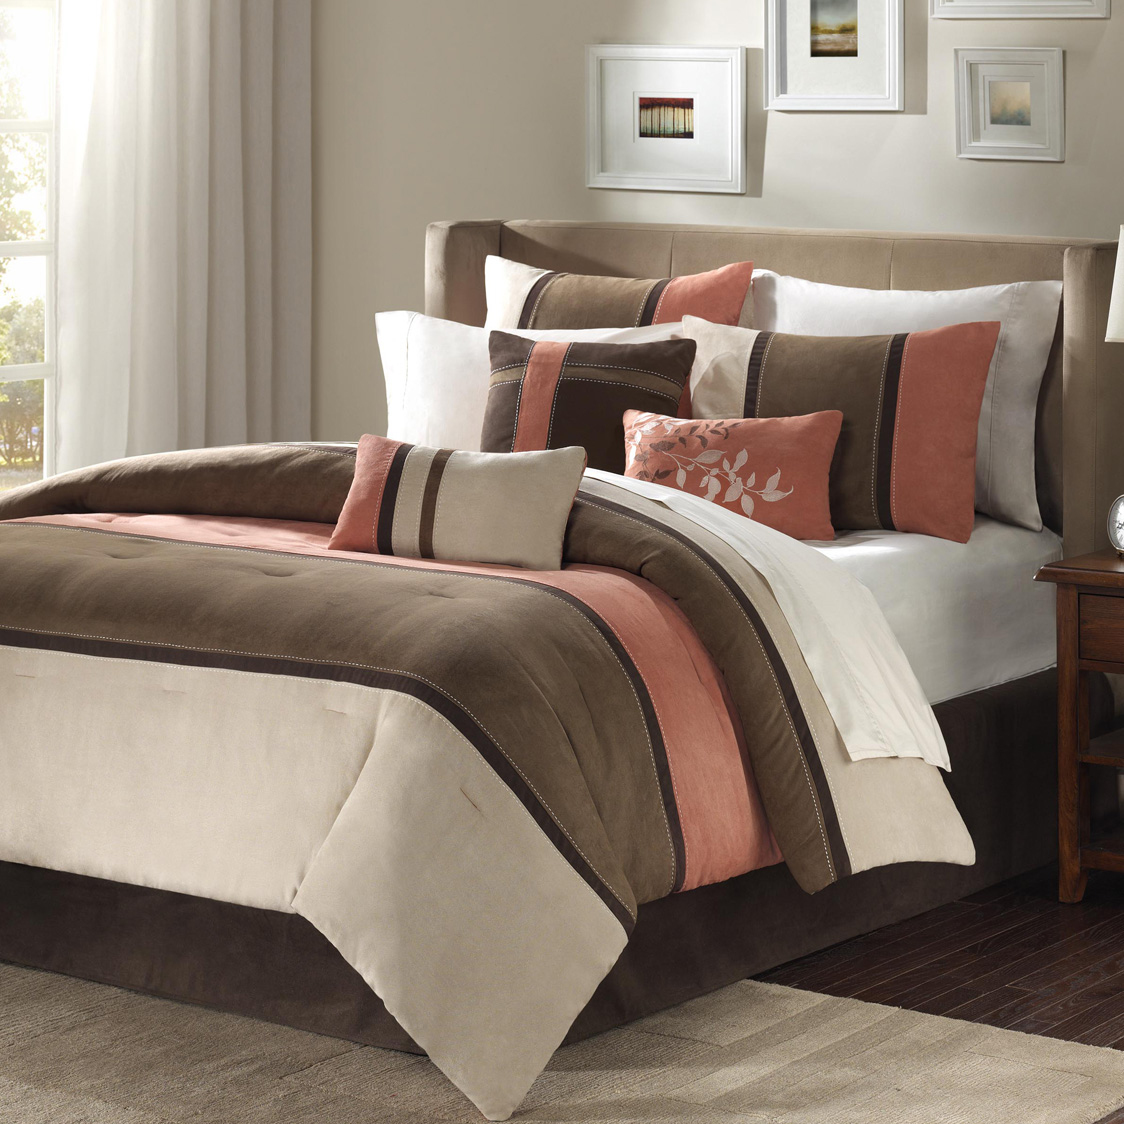 Madison Park Palisades Comforter Set, Best Bedding For California King Bed